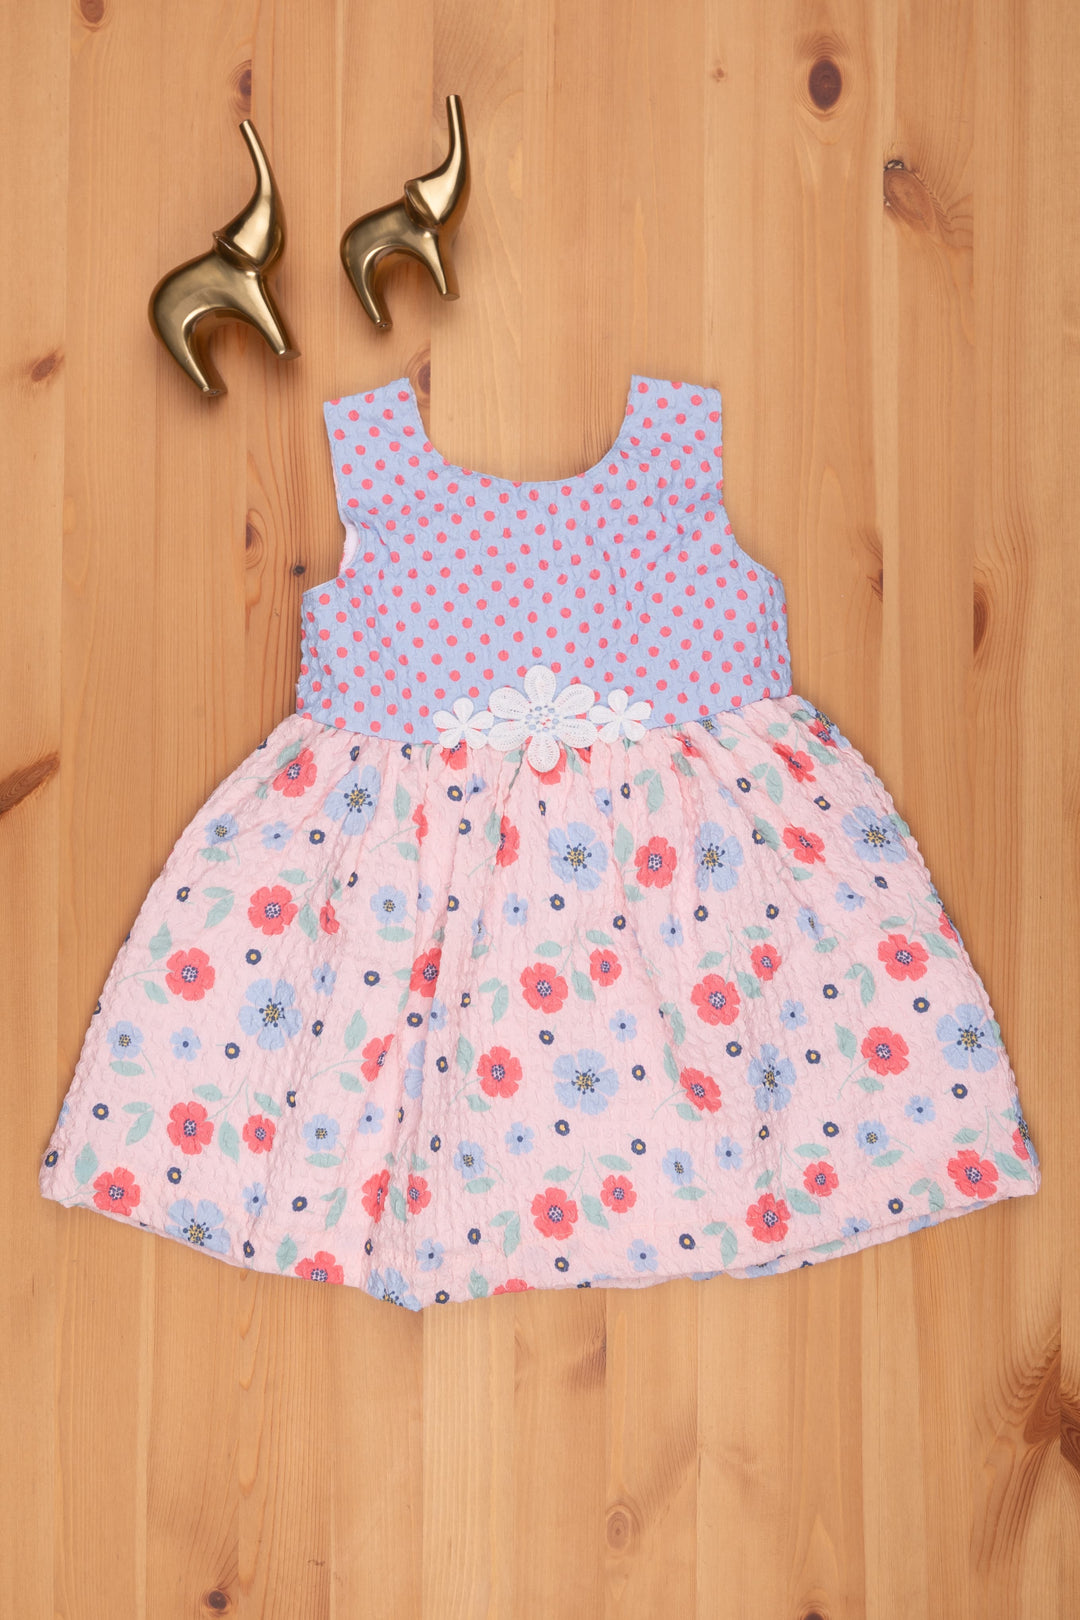 The Nesavu Baby Frock / Jhabla Salmon-Pink Chikan Dress: Floral & Blue Dot Yoke Nesavu 14 (6M) / Salmon BFJ438A-14 Floral Printed Pink Frock For Kids | Daily Wear Frock For Babys | The Nesavu